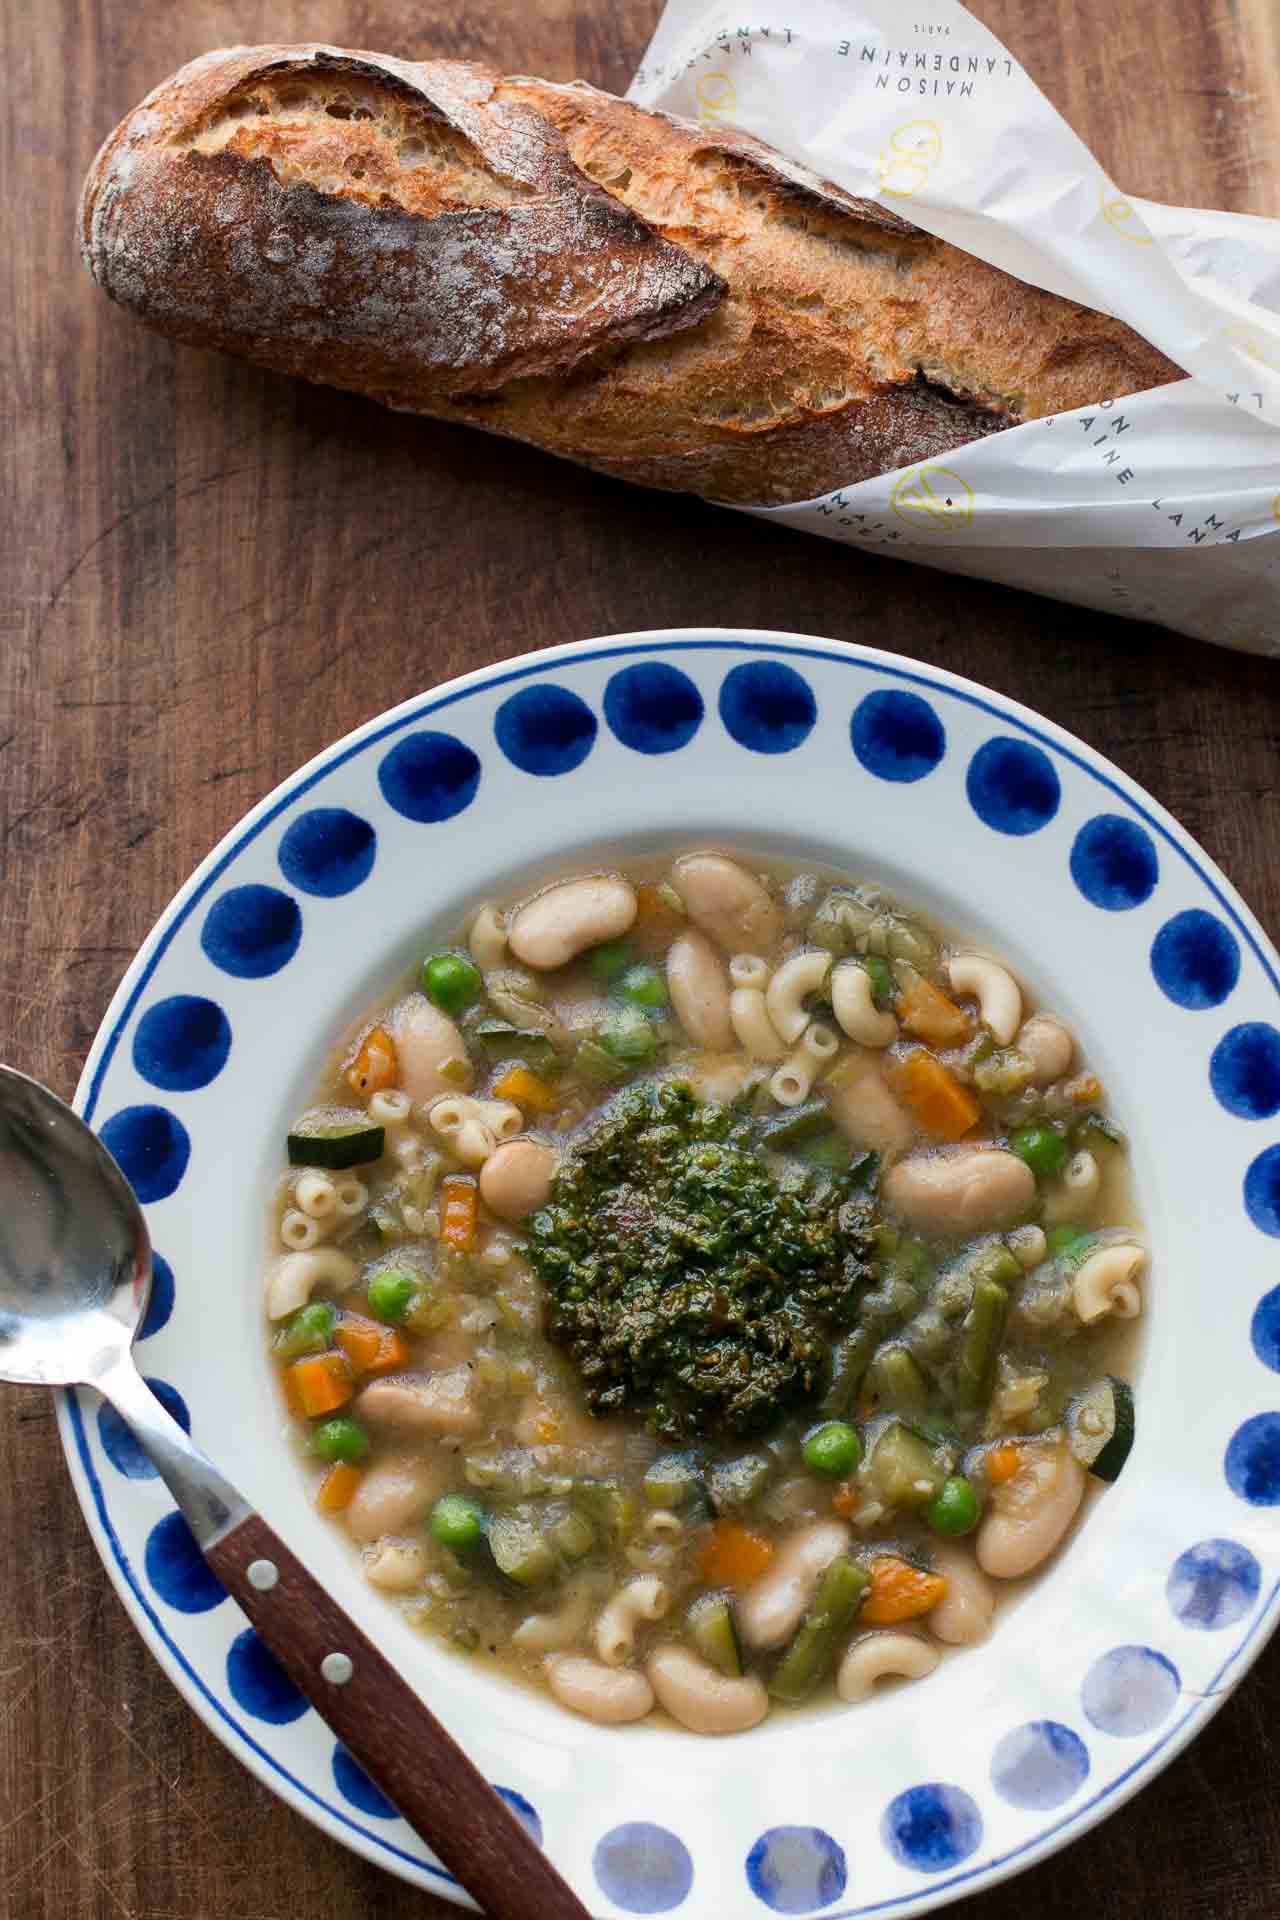 https://www.davidlebovitz.com/wp-content/uploads/2010/07/soupe-au-pistou-recipe-5.jpg